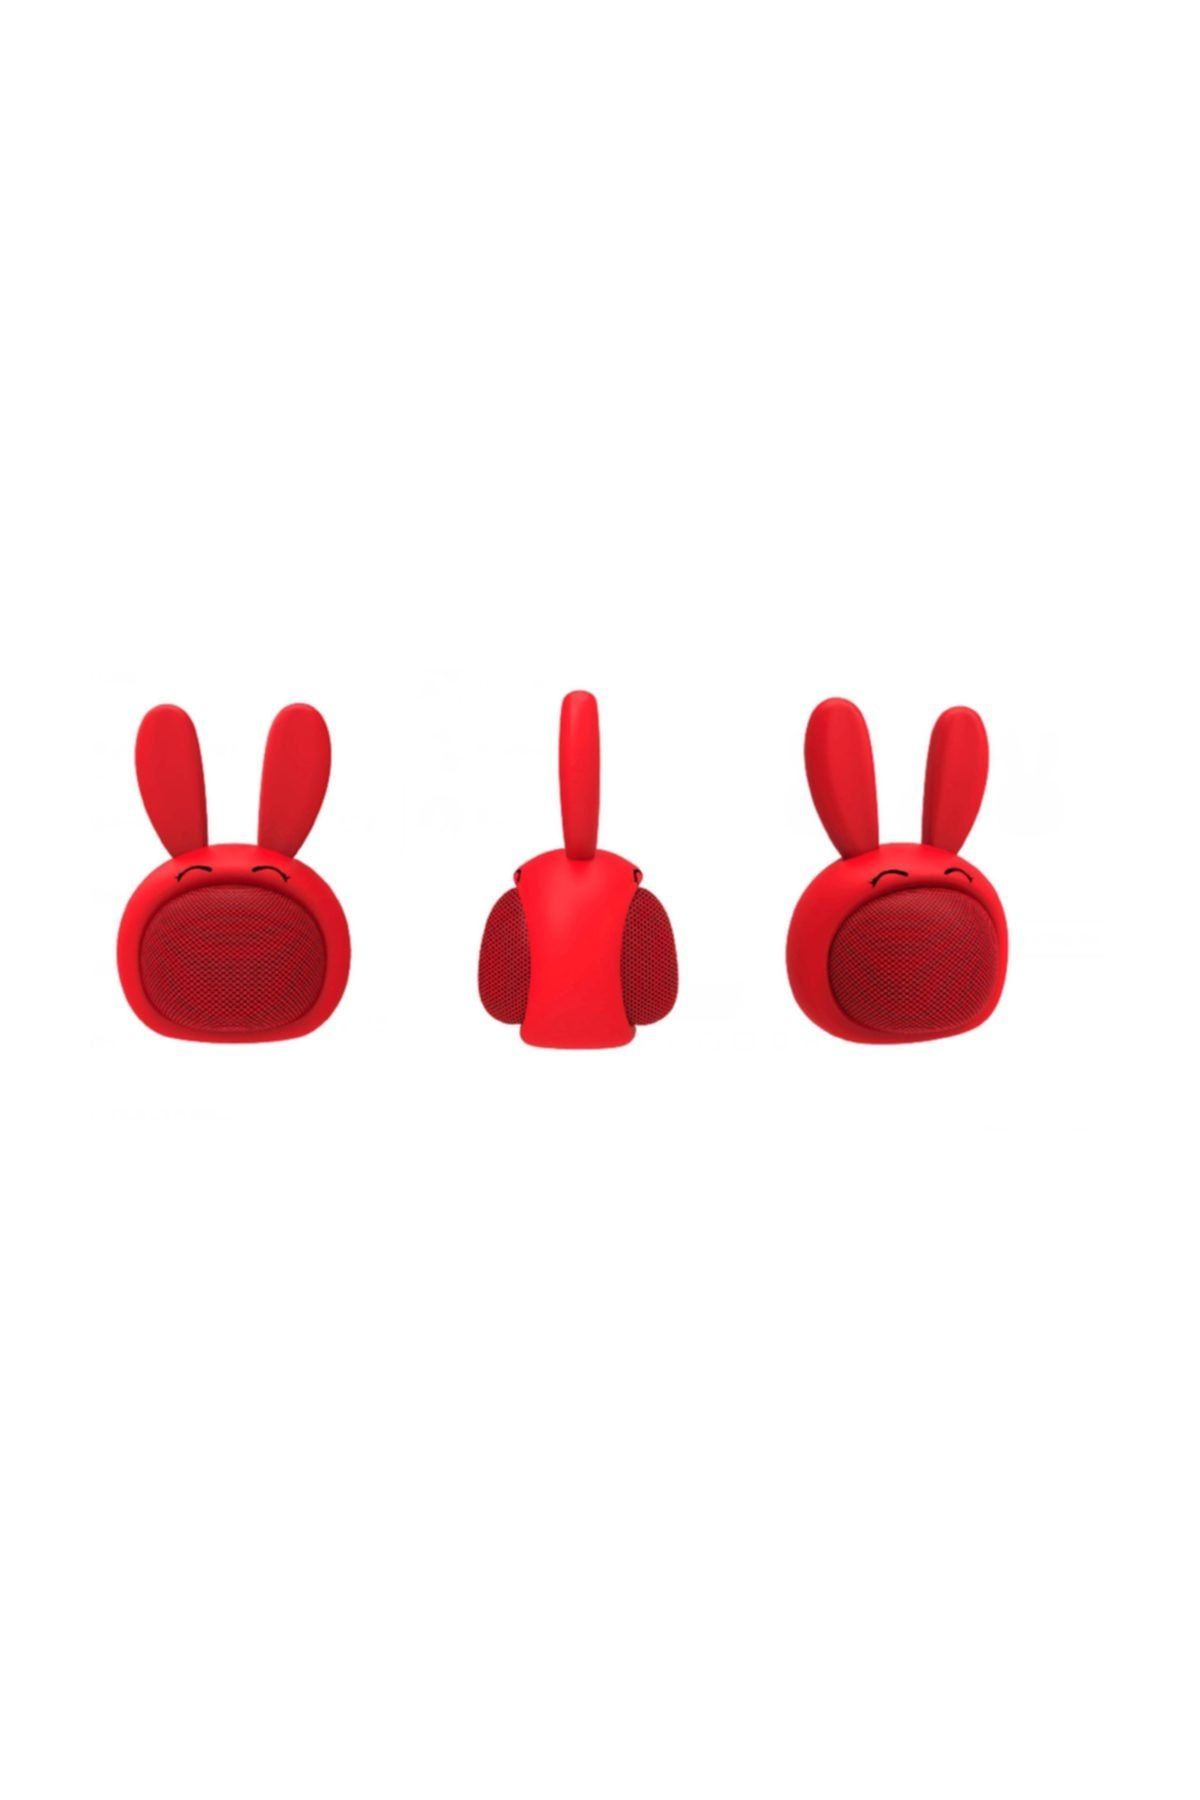 iCutes Kırmızı Tavşan Mini Rabbit Kablosuz Bluetooth Hoparlör M815